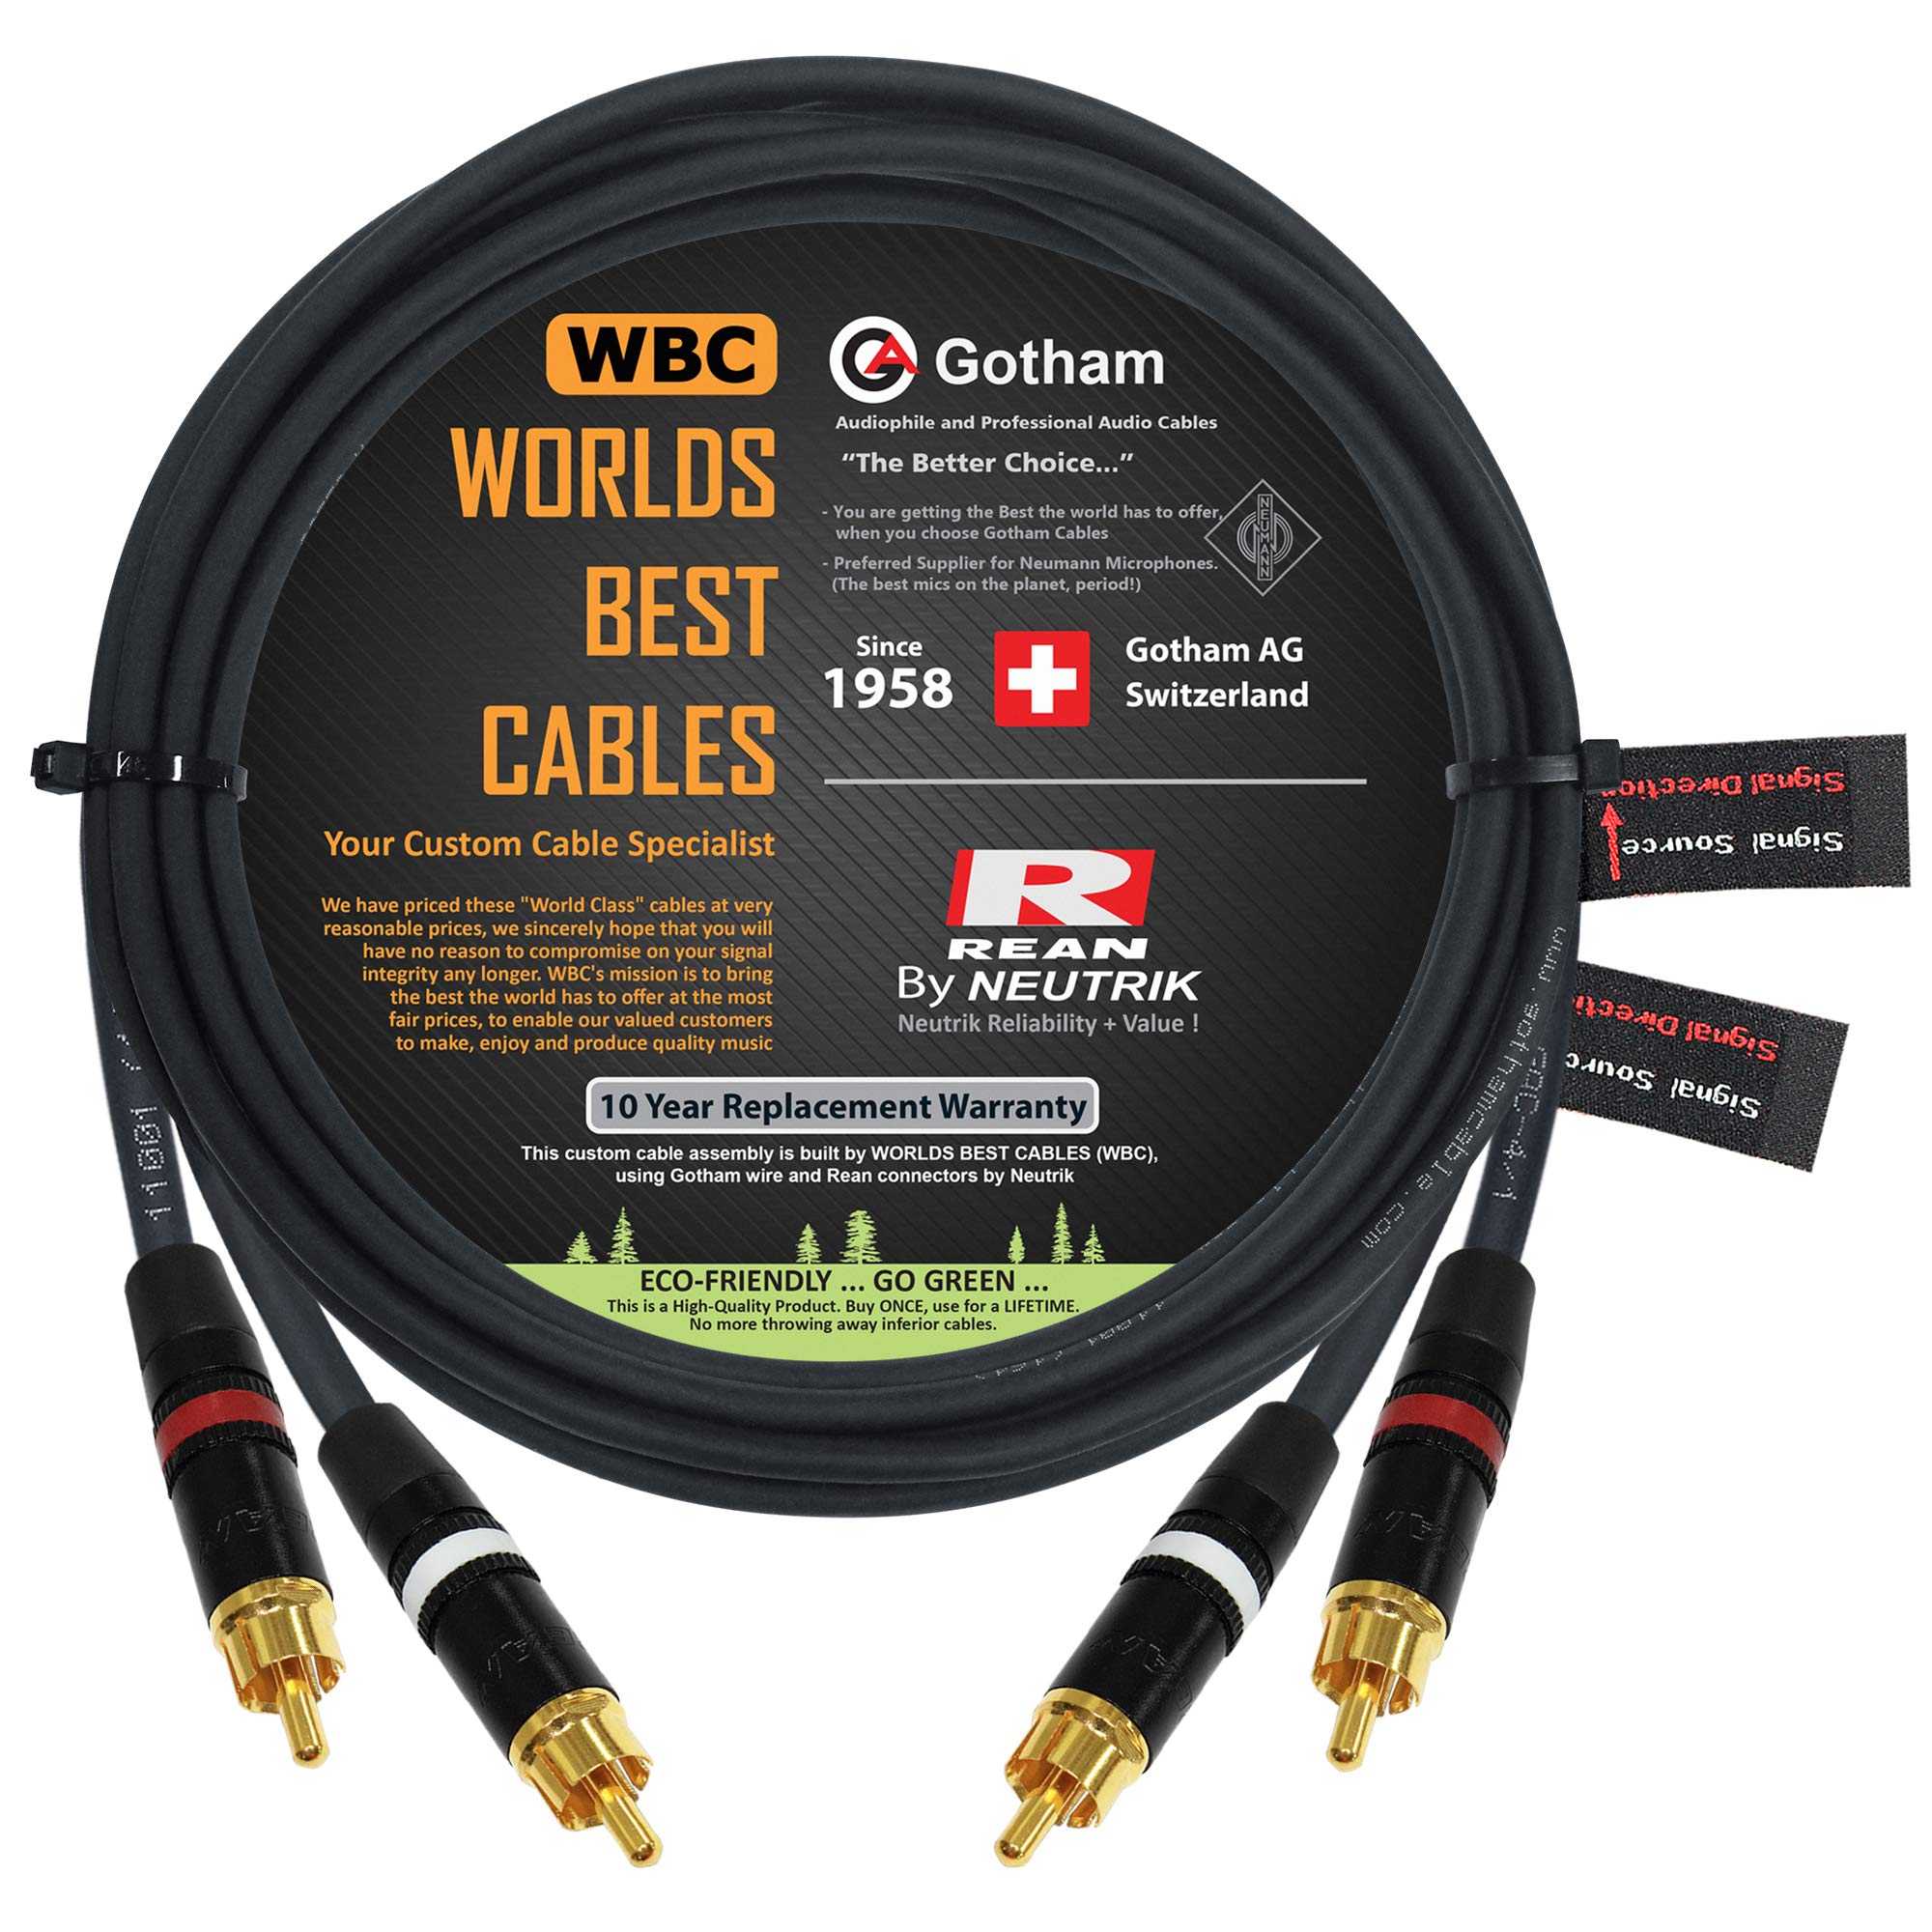 15 Foot RCA Cable Pair - Gotham GAC-4/1 (Black) Star-Quad Audio Interconnect Cable with Neutrik-Rean NYS Gold RCA Connectors - Directional